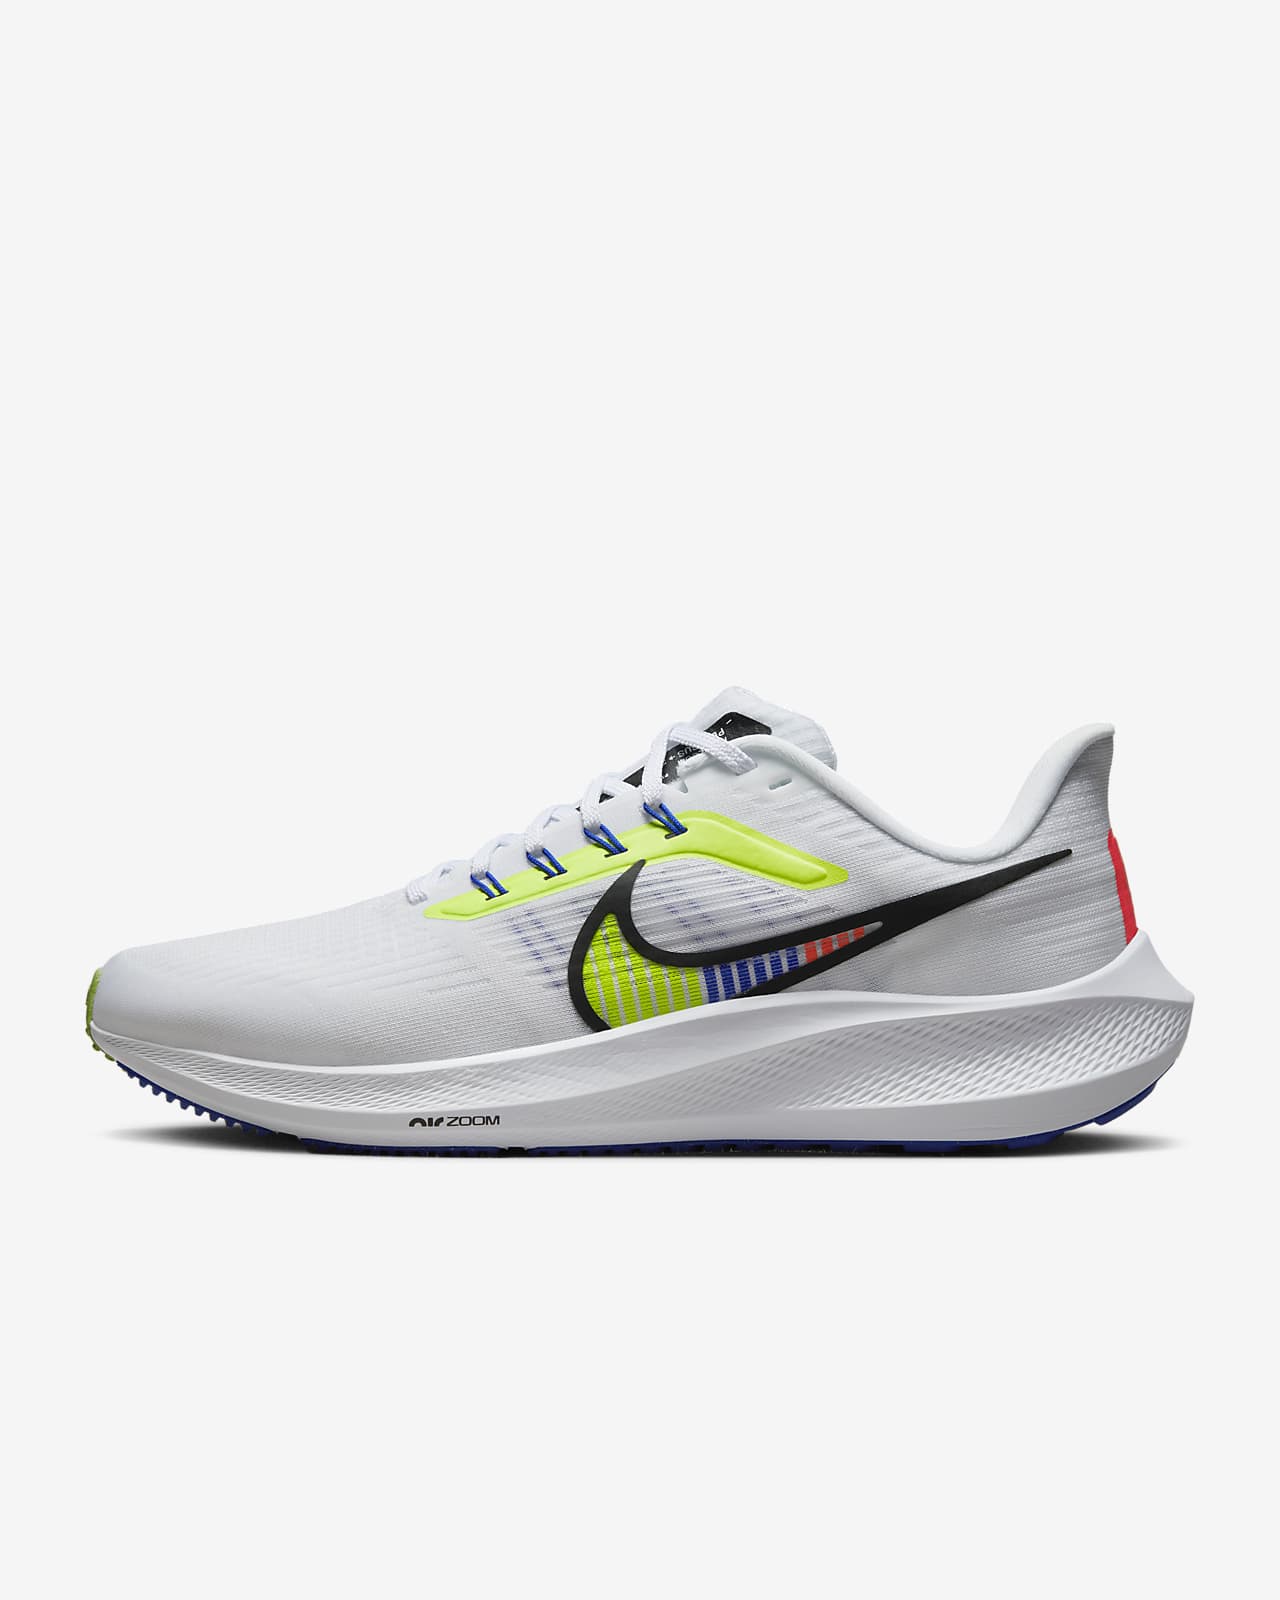 Calzado de running en carretera para Pegasus Premium. Nike MX